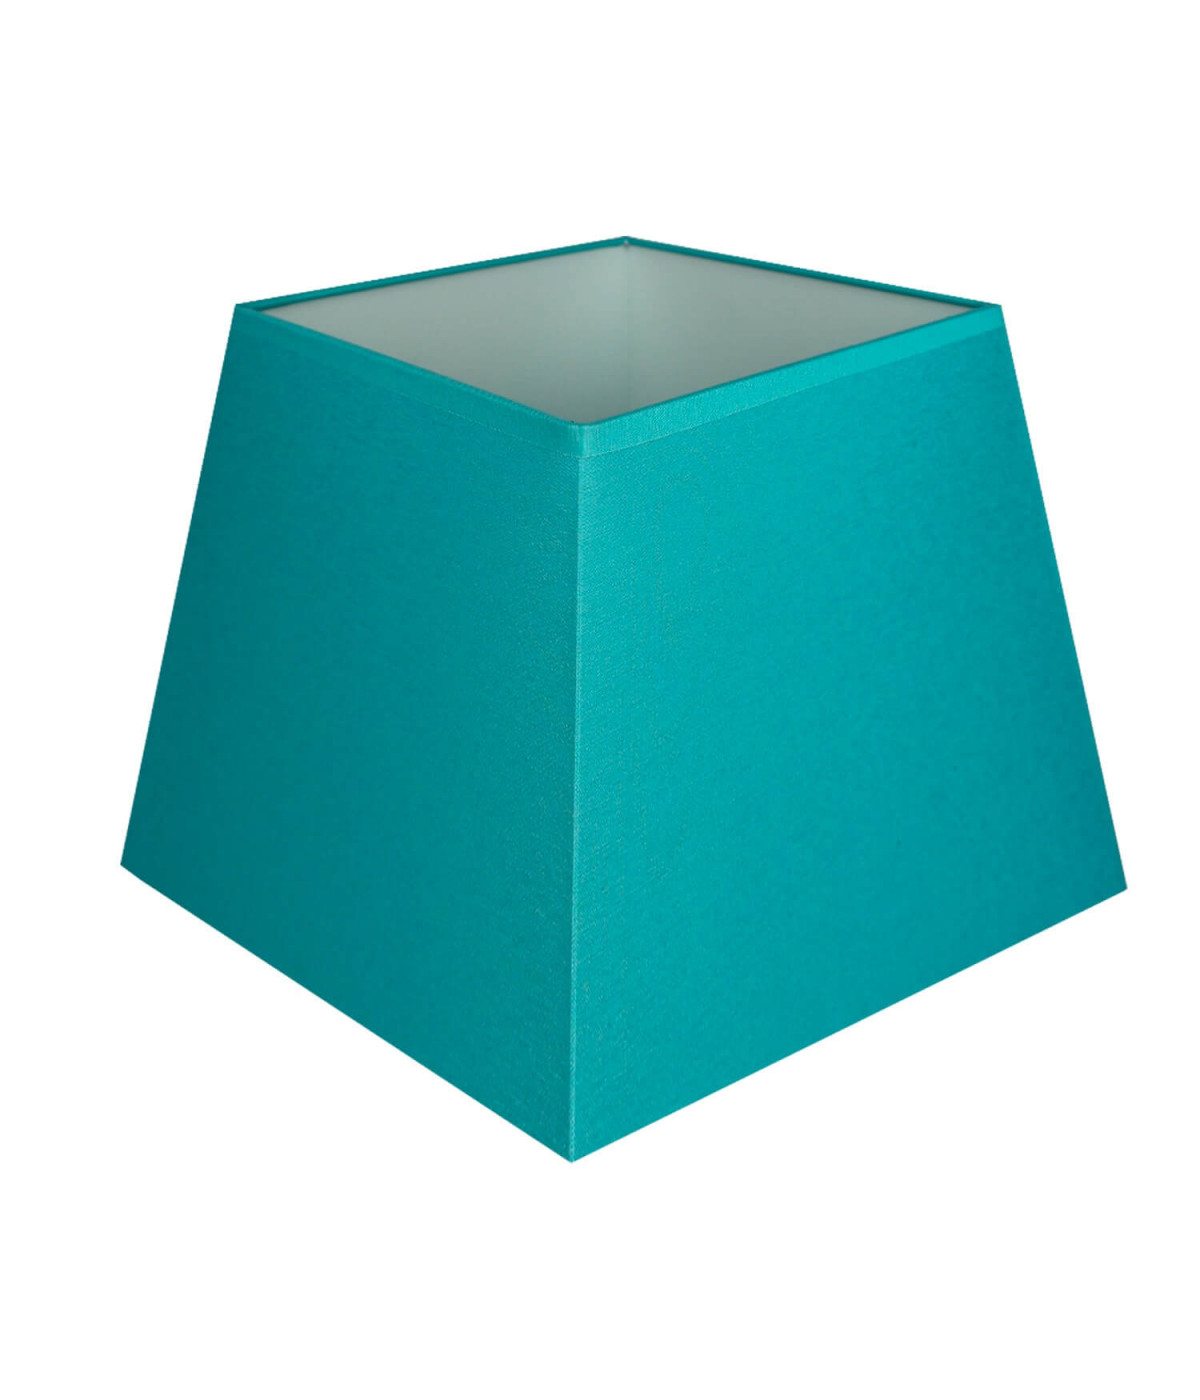 Abajur quadrado piramidal azul turquesa